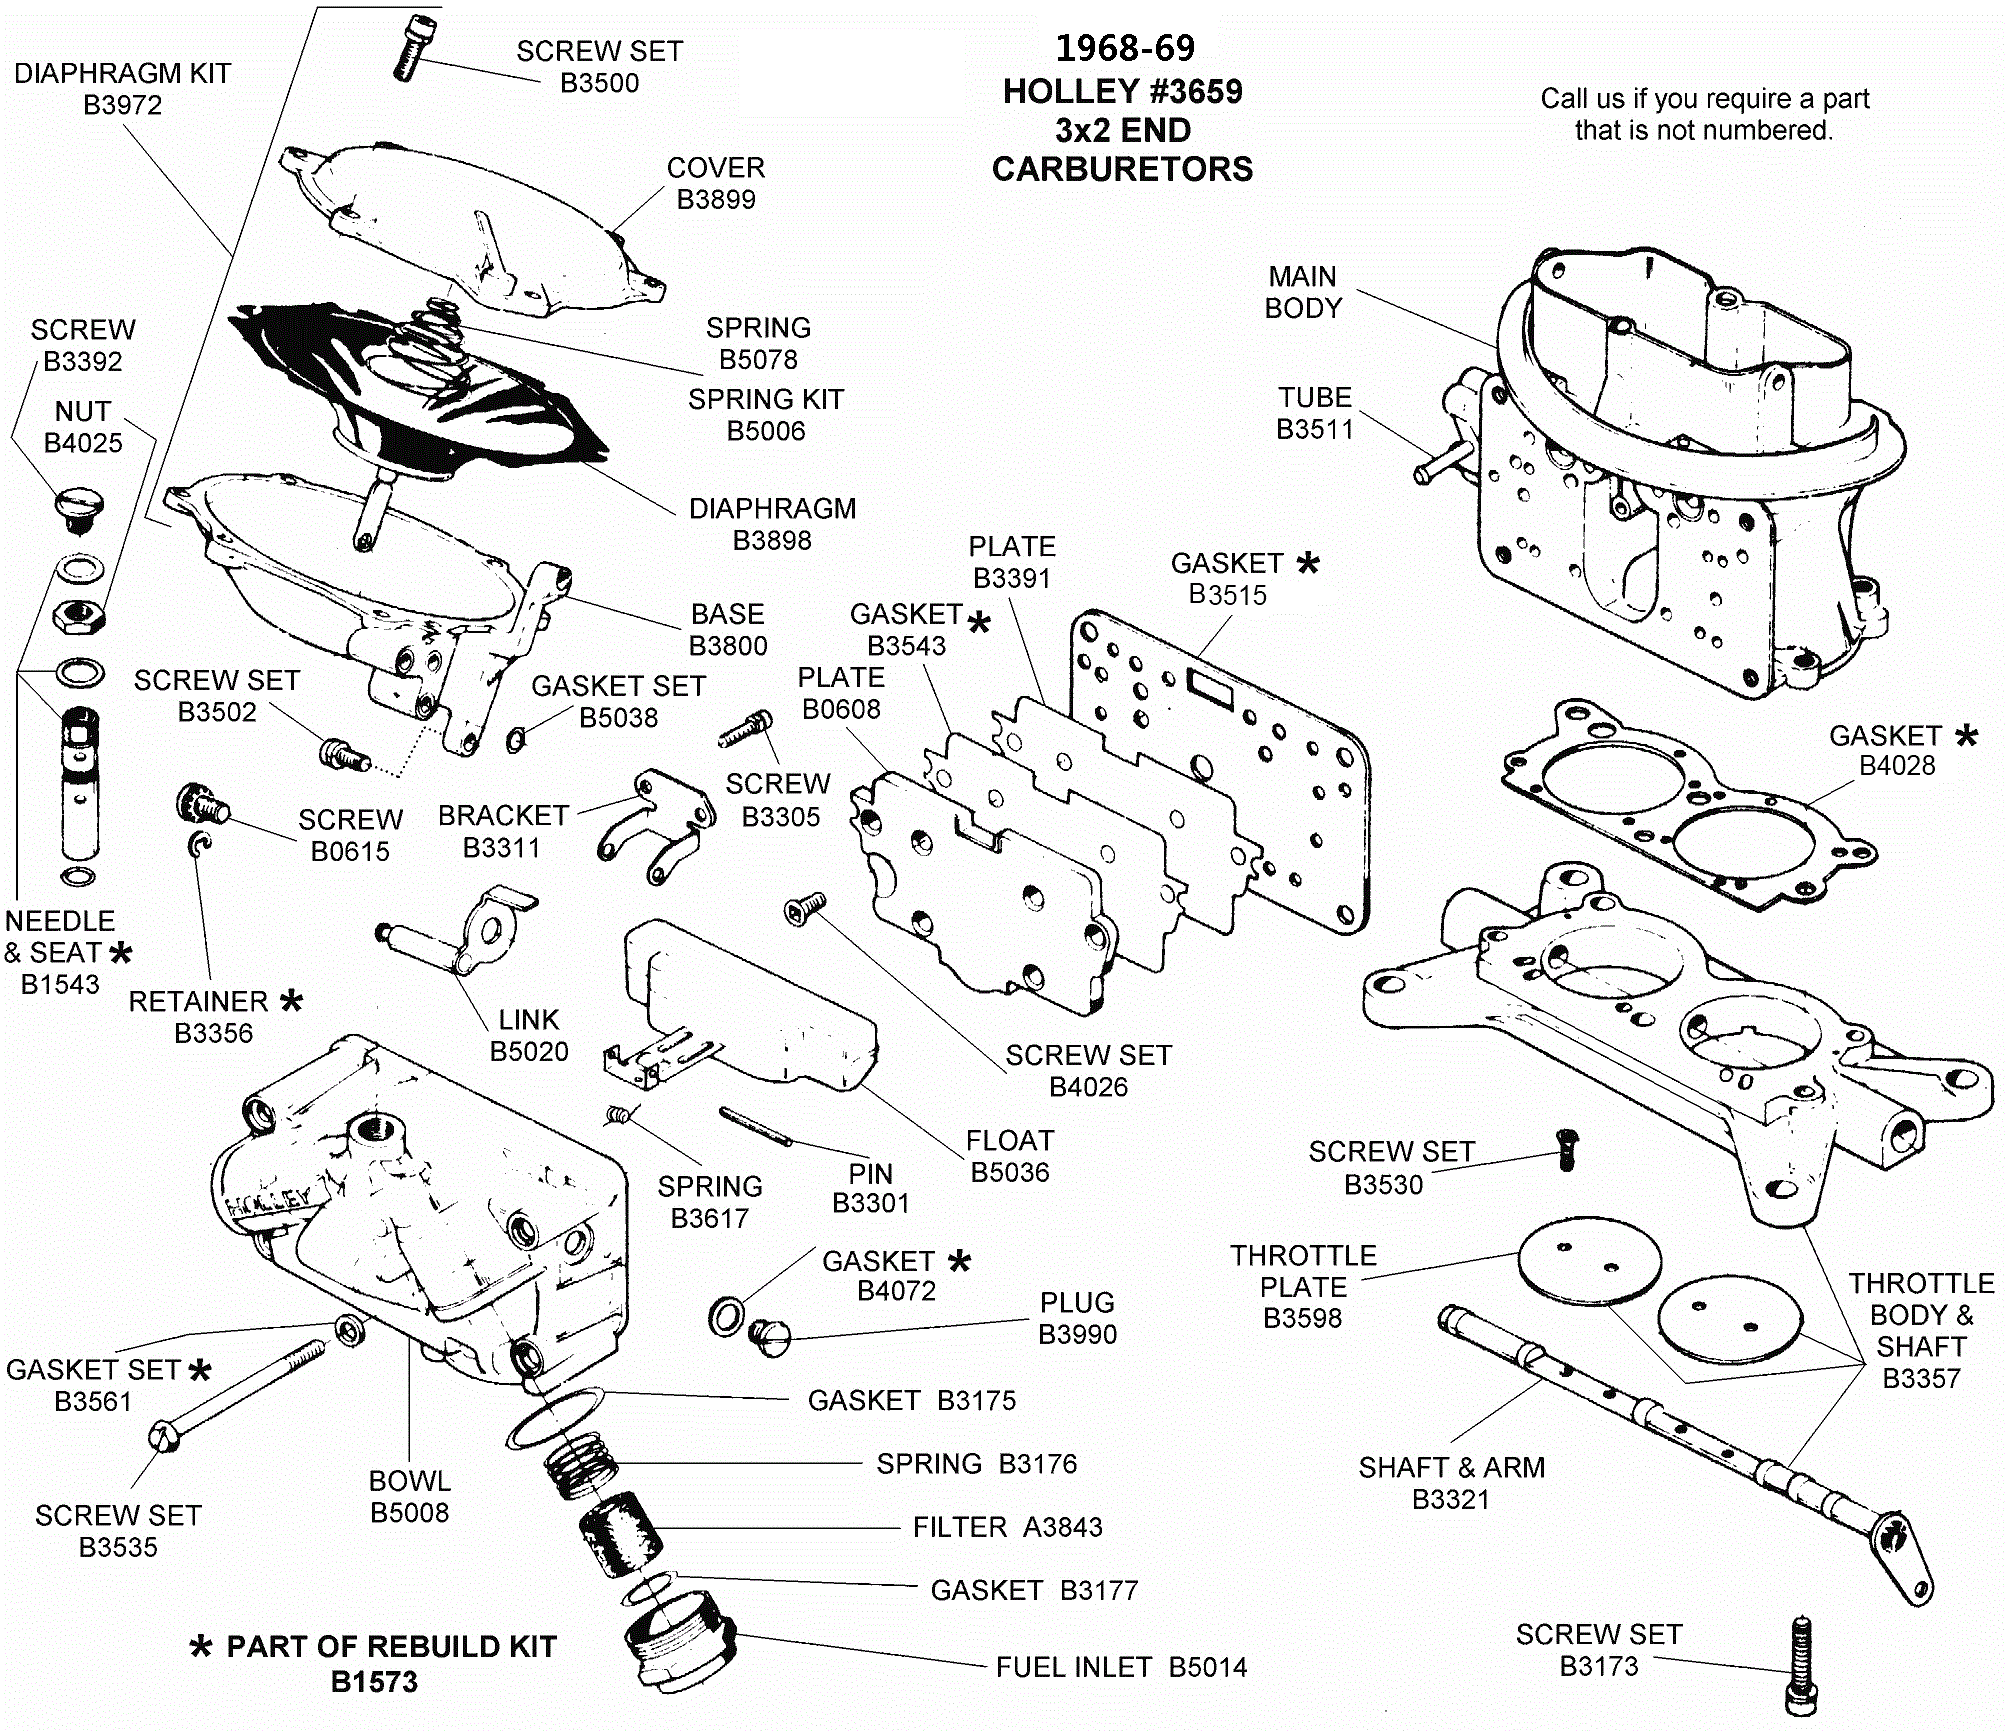 Holley End Carburetor Assembly Diagram Thumbnail